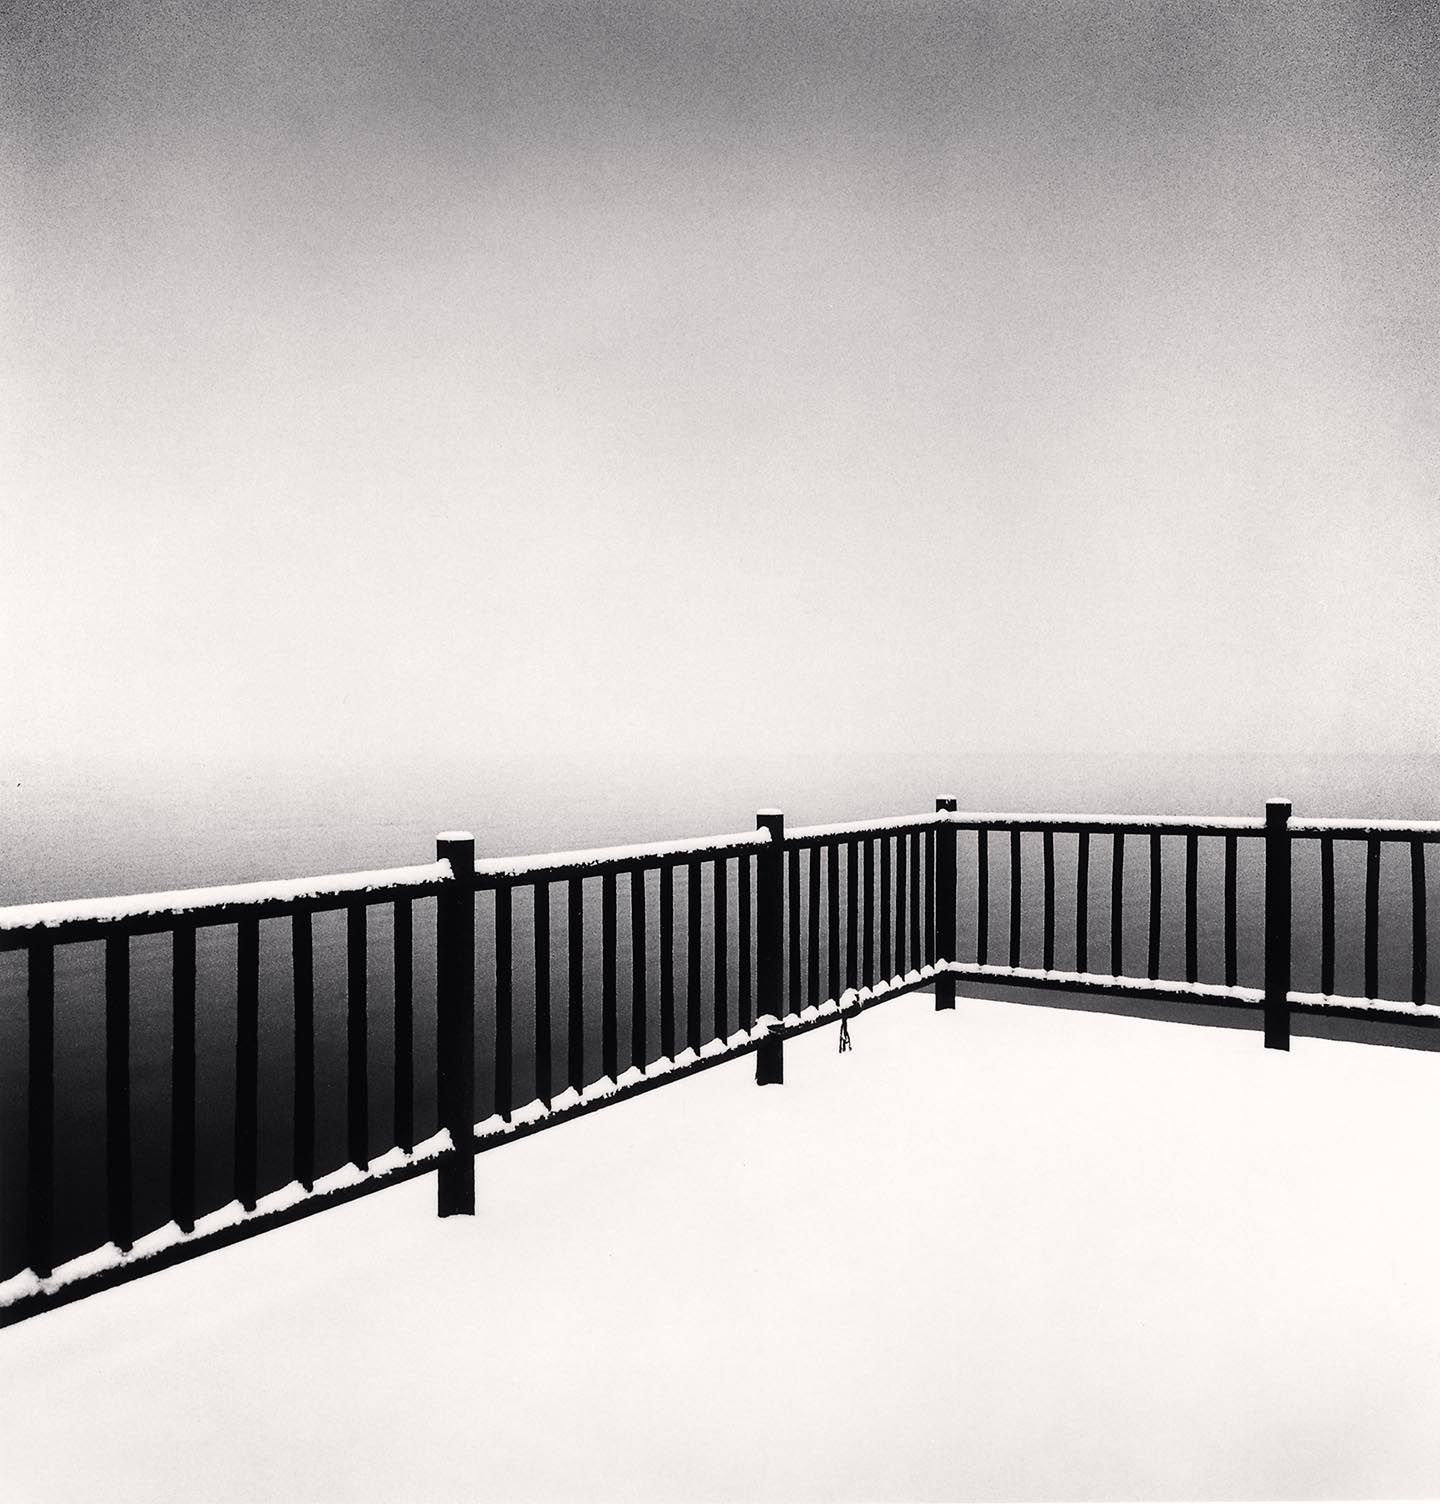 Michael Kenna, 'Fence in Snowfall, Toya Lake, Hokkaido, Japan, 2007'